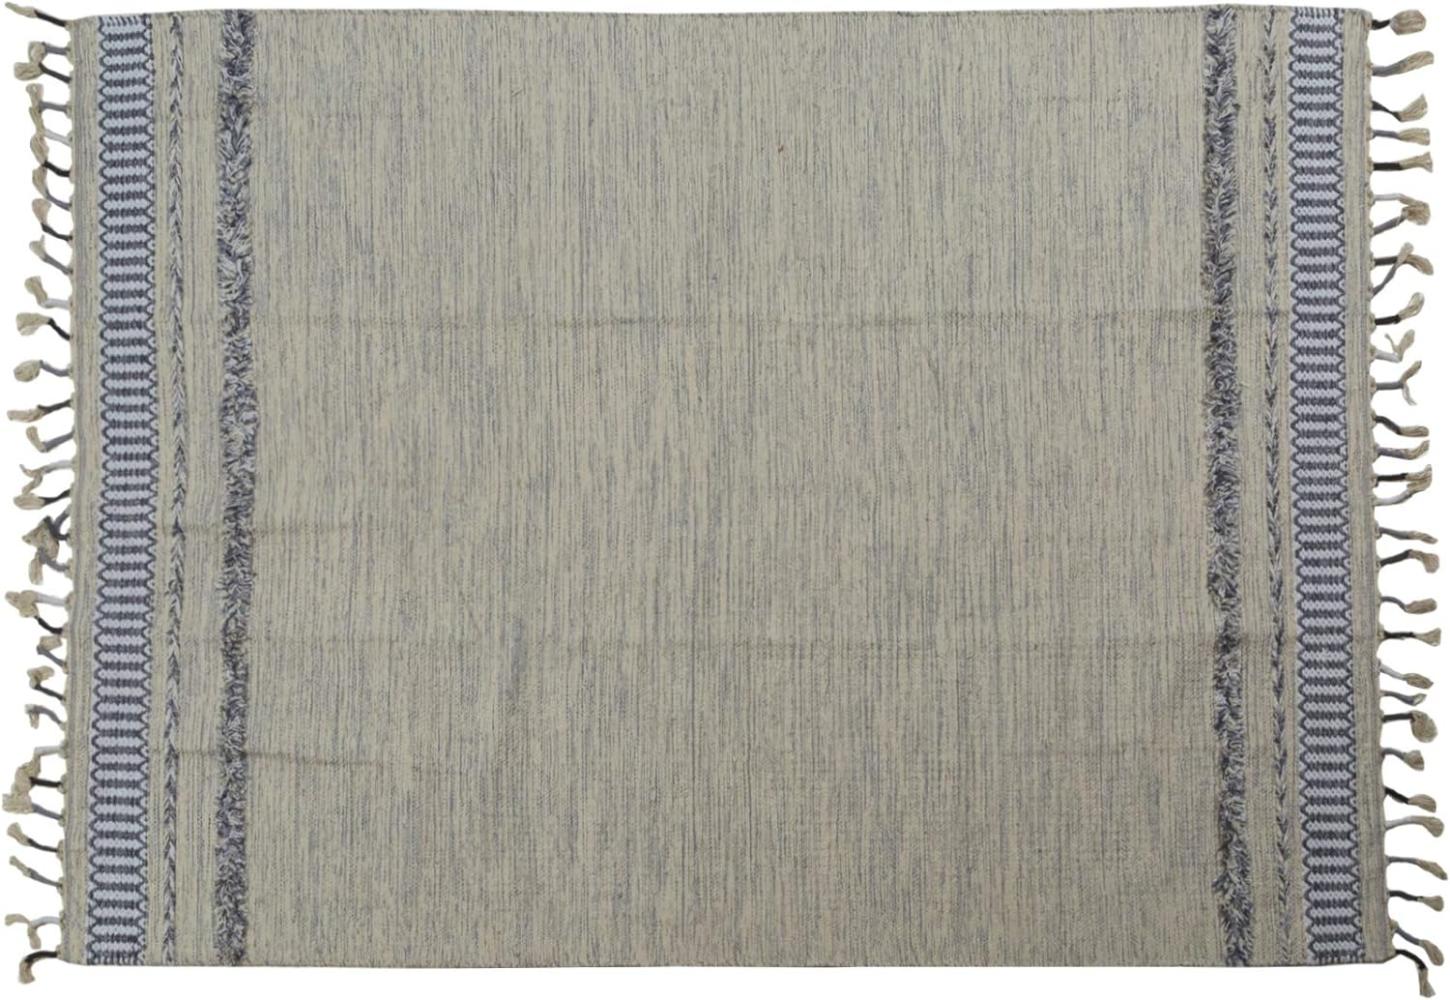 Dmora Moderner Boston-Teppich, Kelim-Stil, 100% Baumwolle, grau, 170x110cm Bild 1